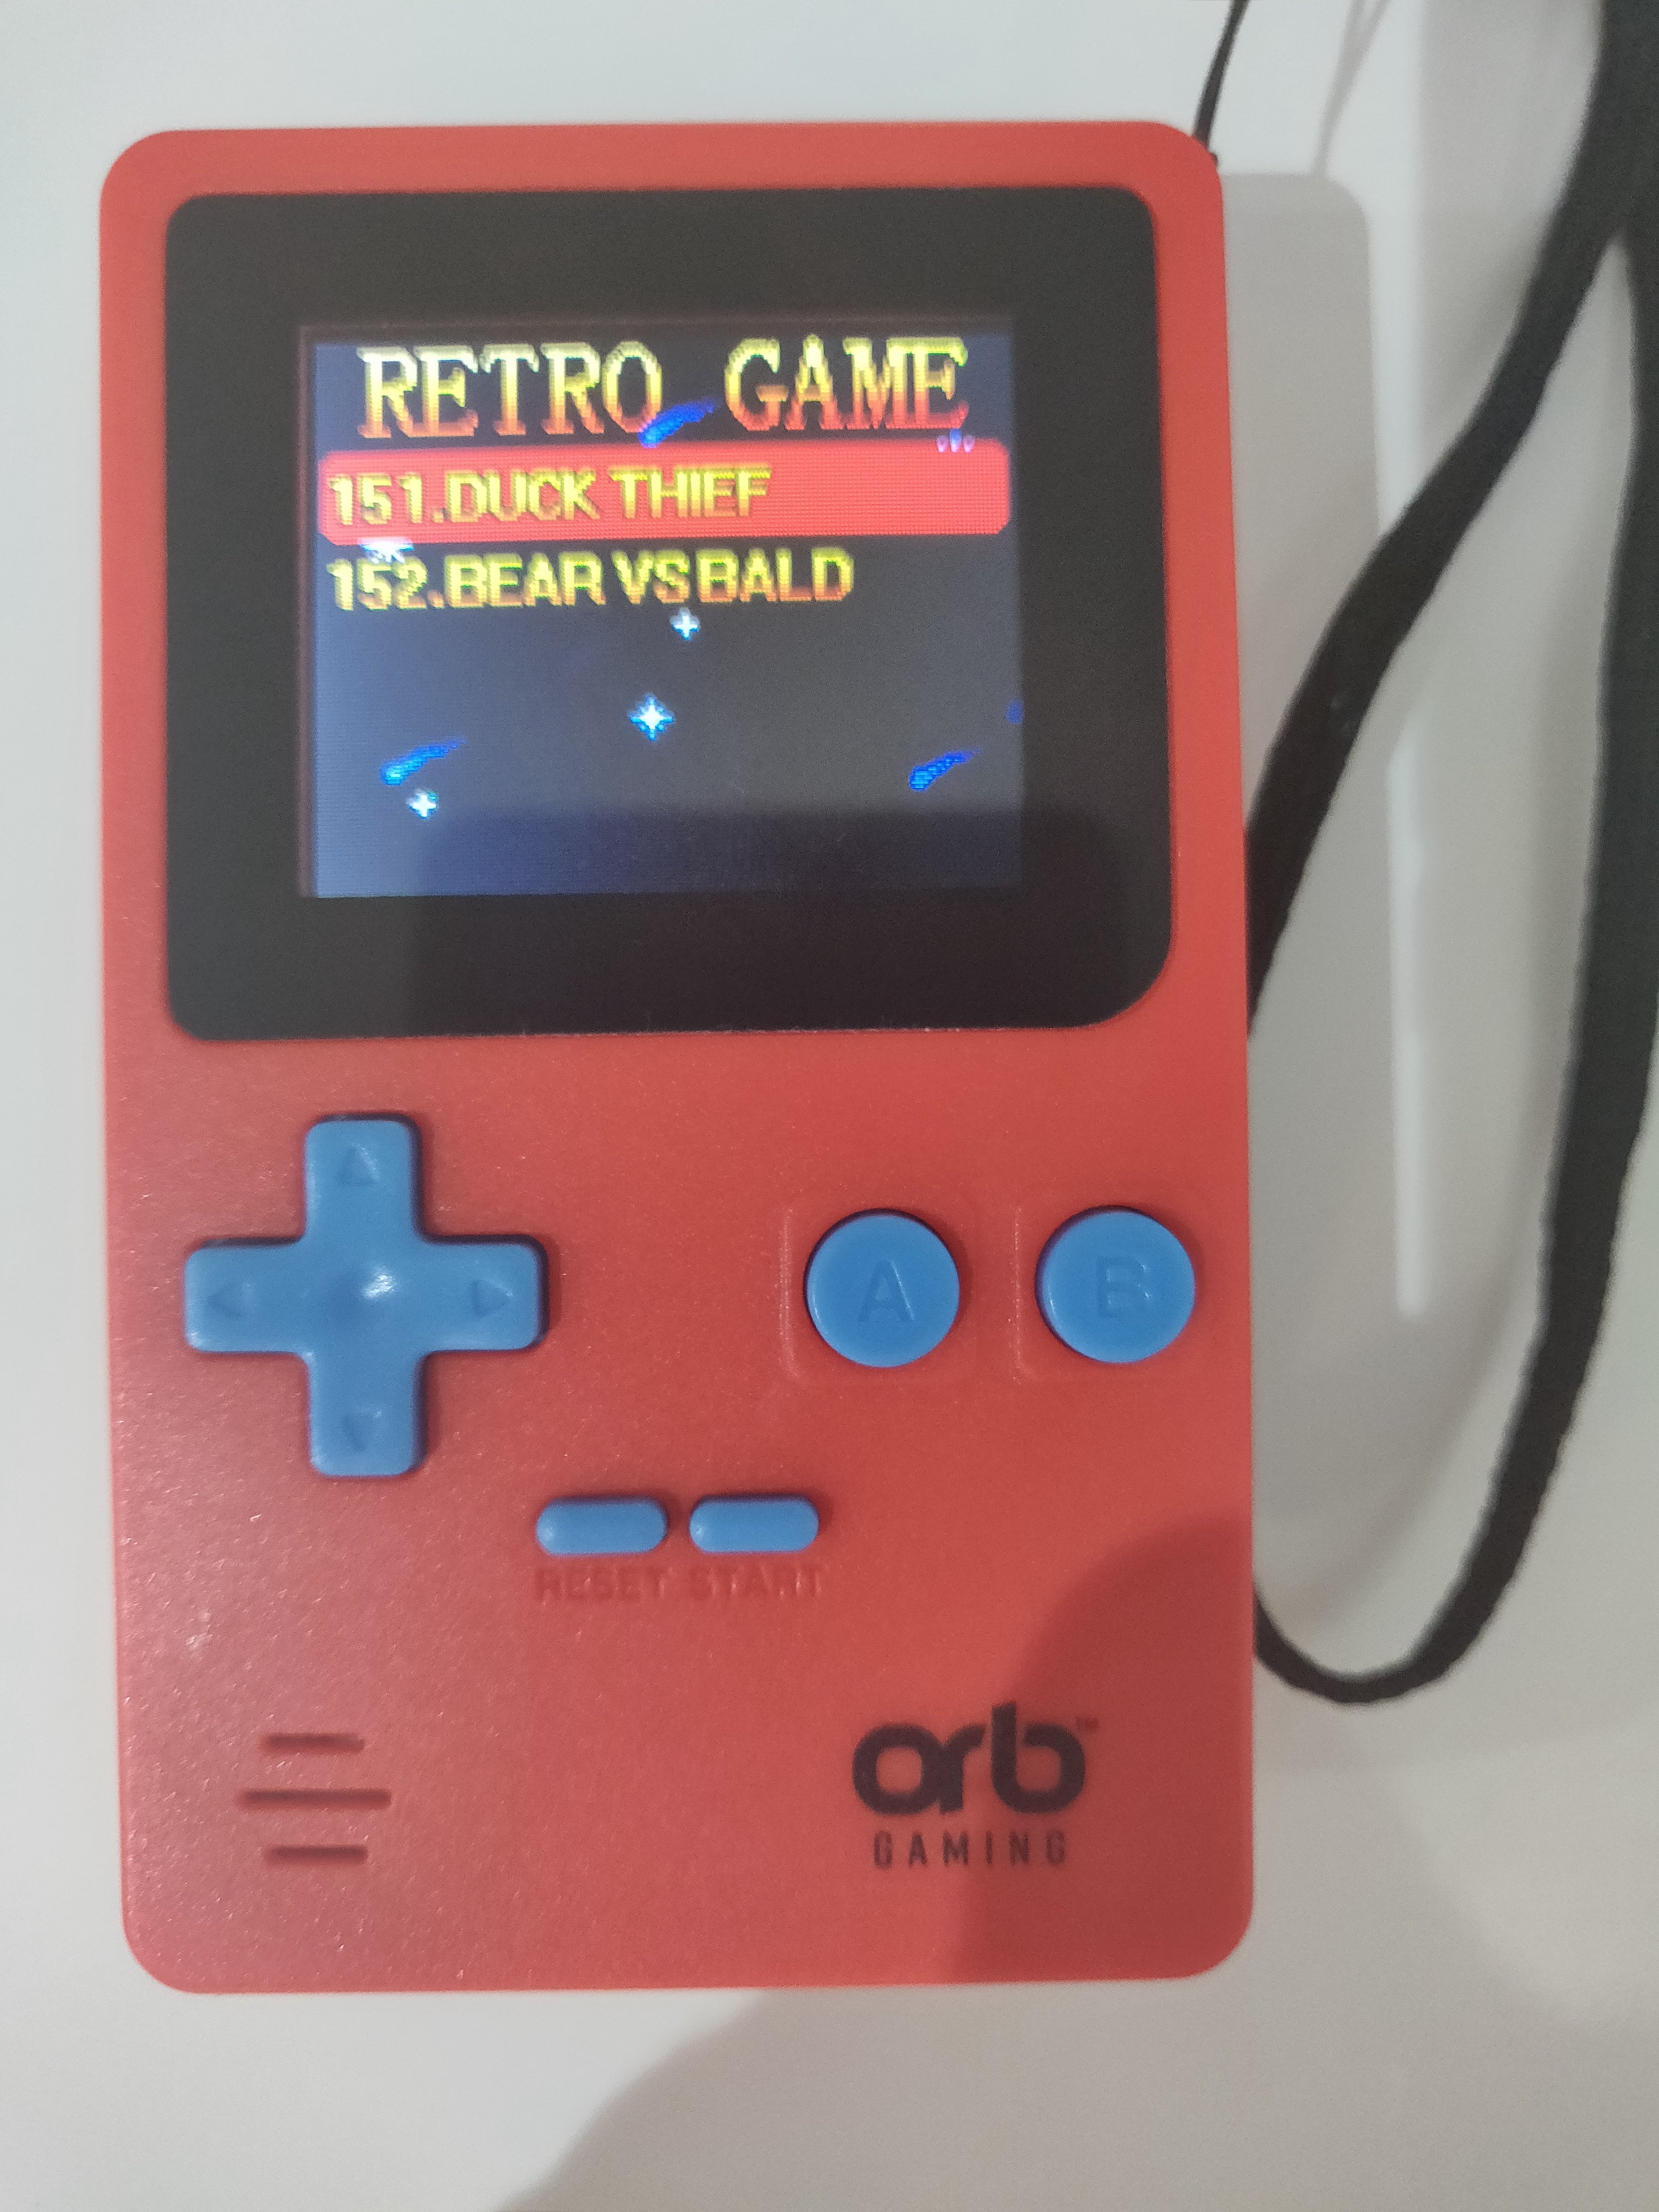 orb retro handheld console